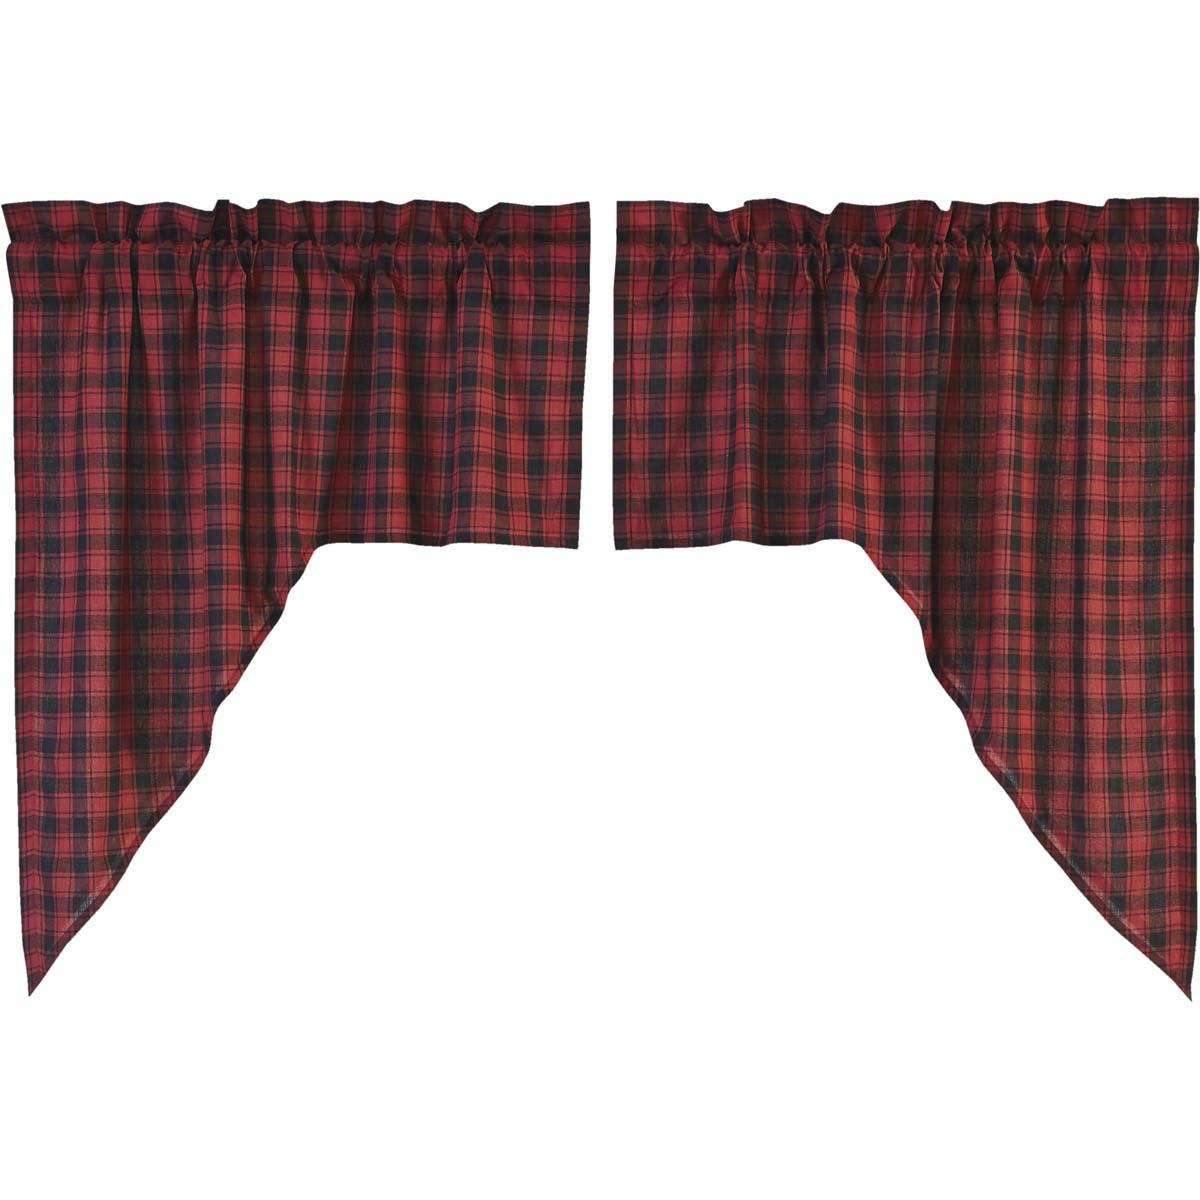 Cumberland Swag Curtain Set of 2 36x36x16 - The Fox Decor